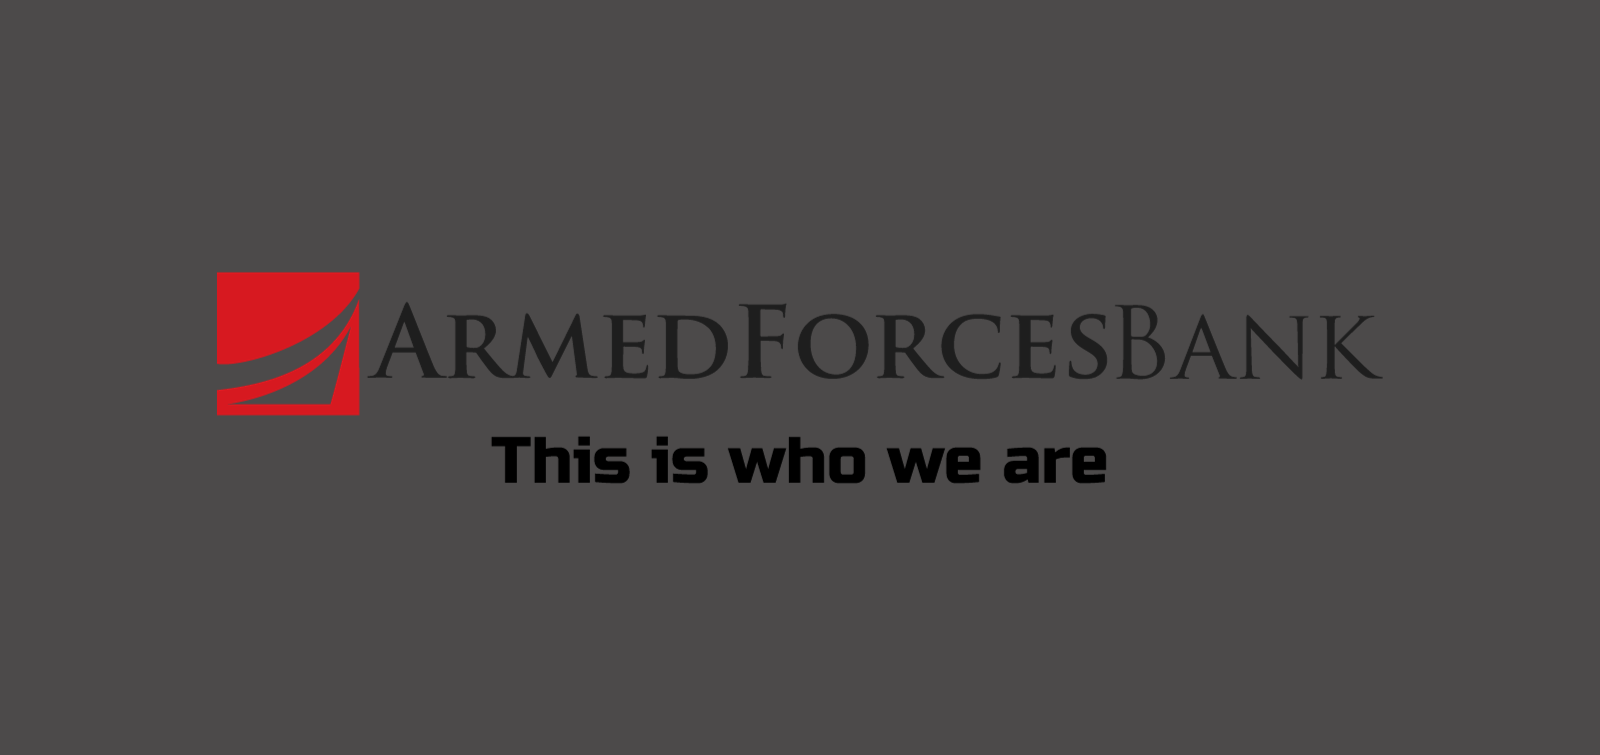 Armed Forces Bank logo centered on dark grey background.